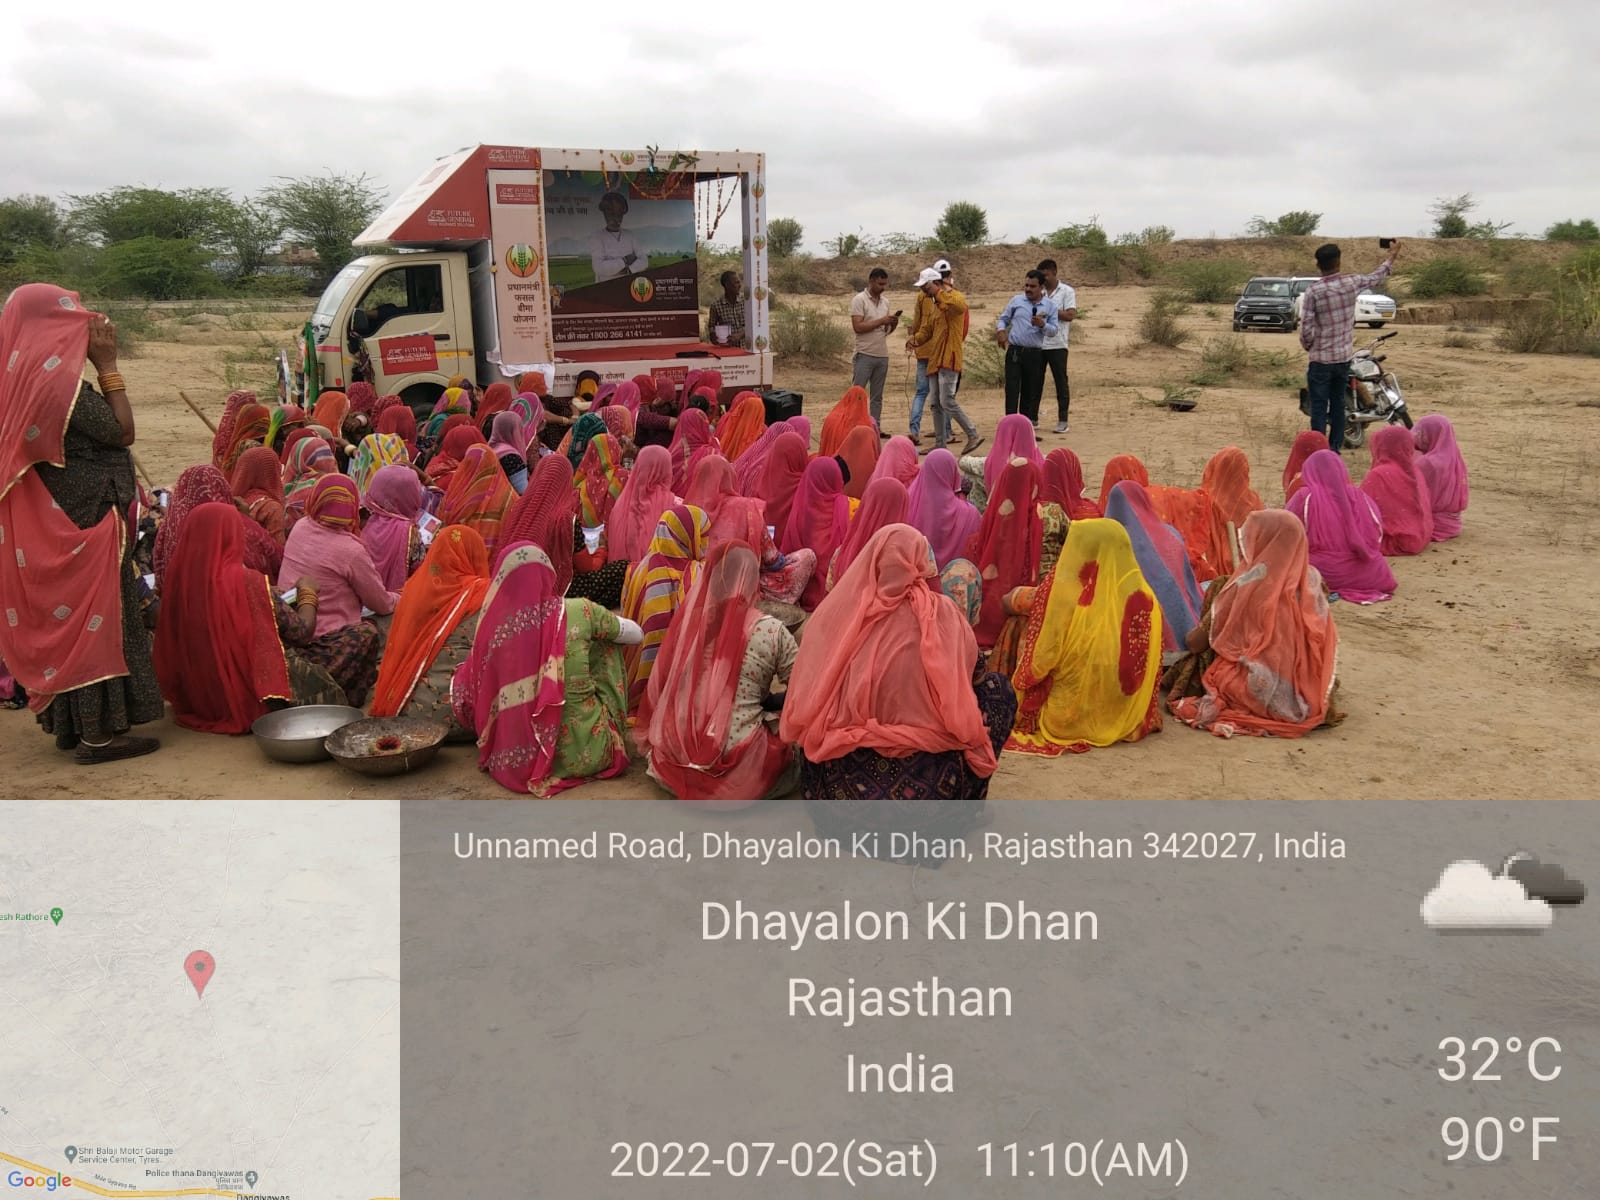 CC Workshop in Jodhpur District Rajasthan